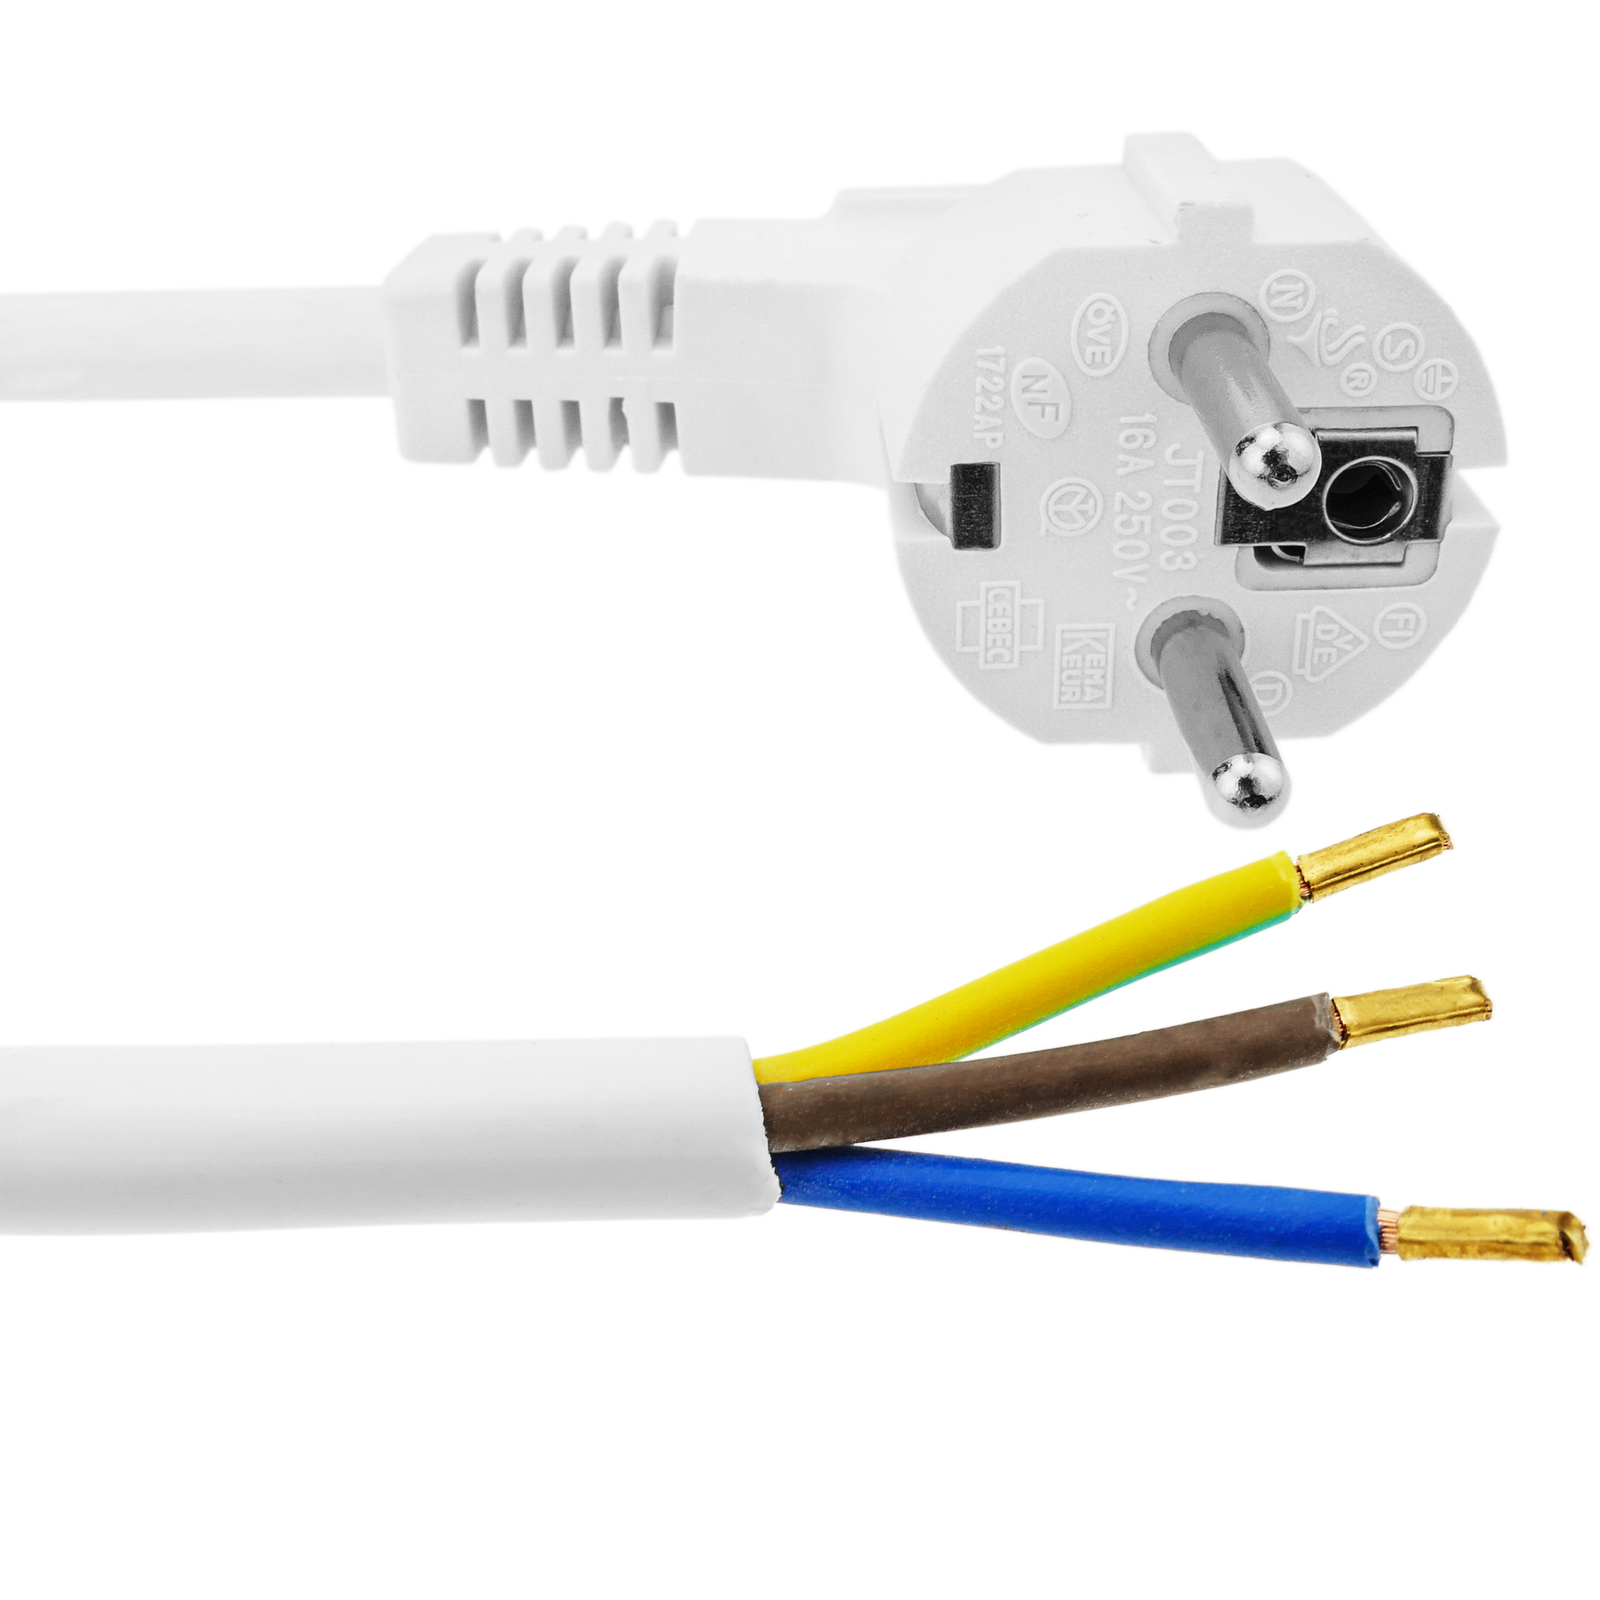 Cable Eléctrico Color Blanco Multifilar 1mm Funsa Rollo 100m